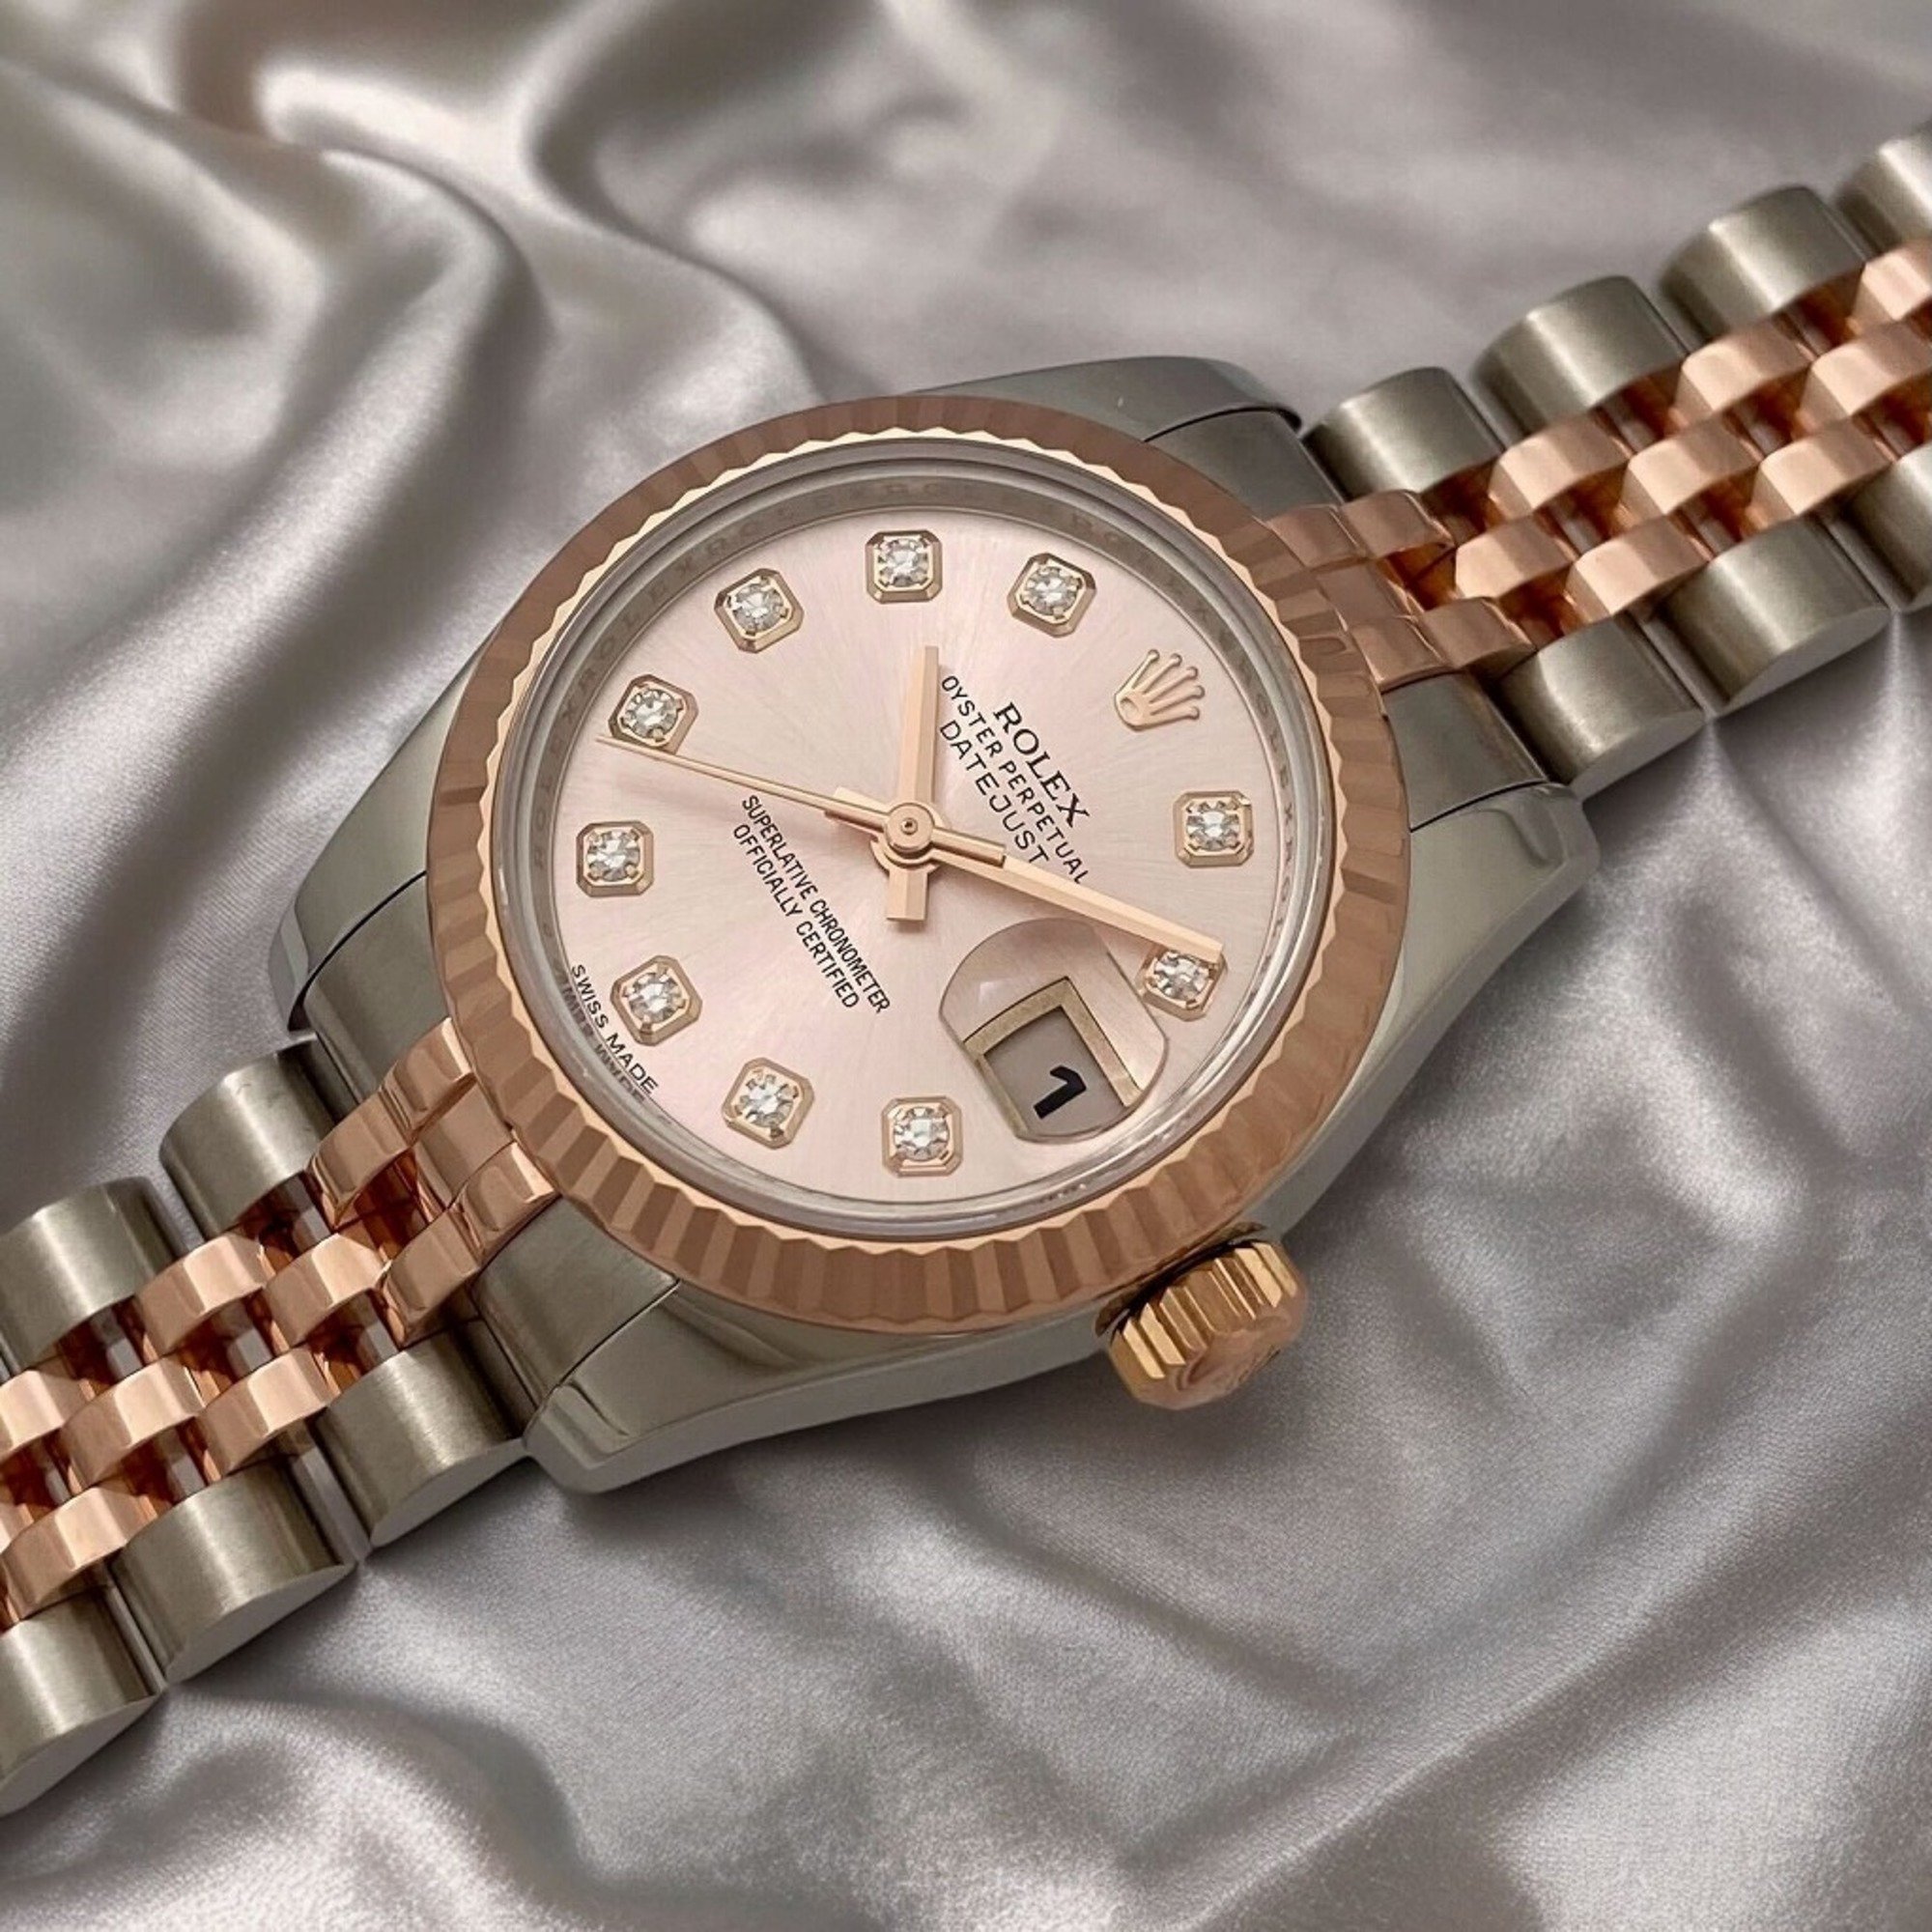 Rolex Datejust 179171G Silver x 10P Diamond Ladies Watch